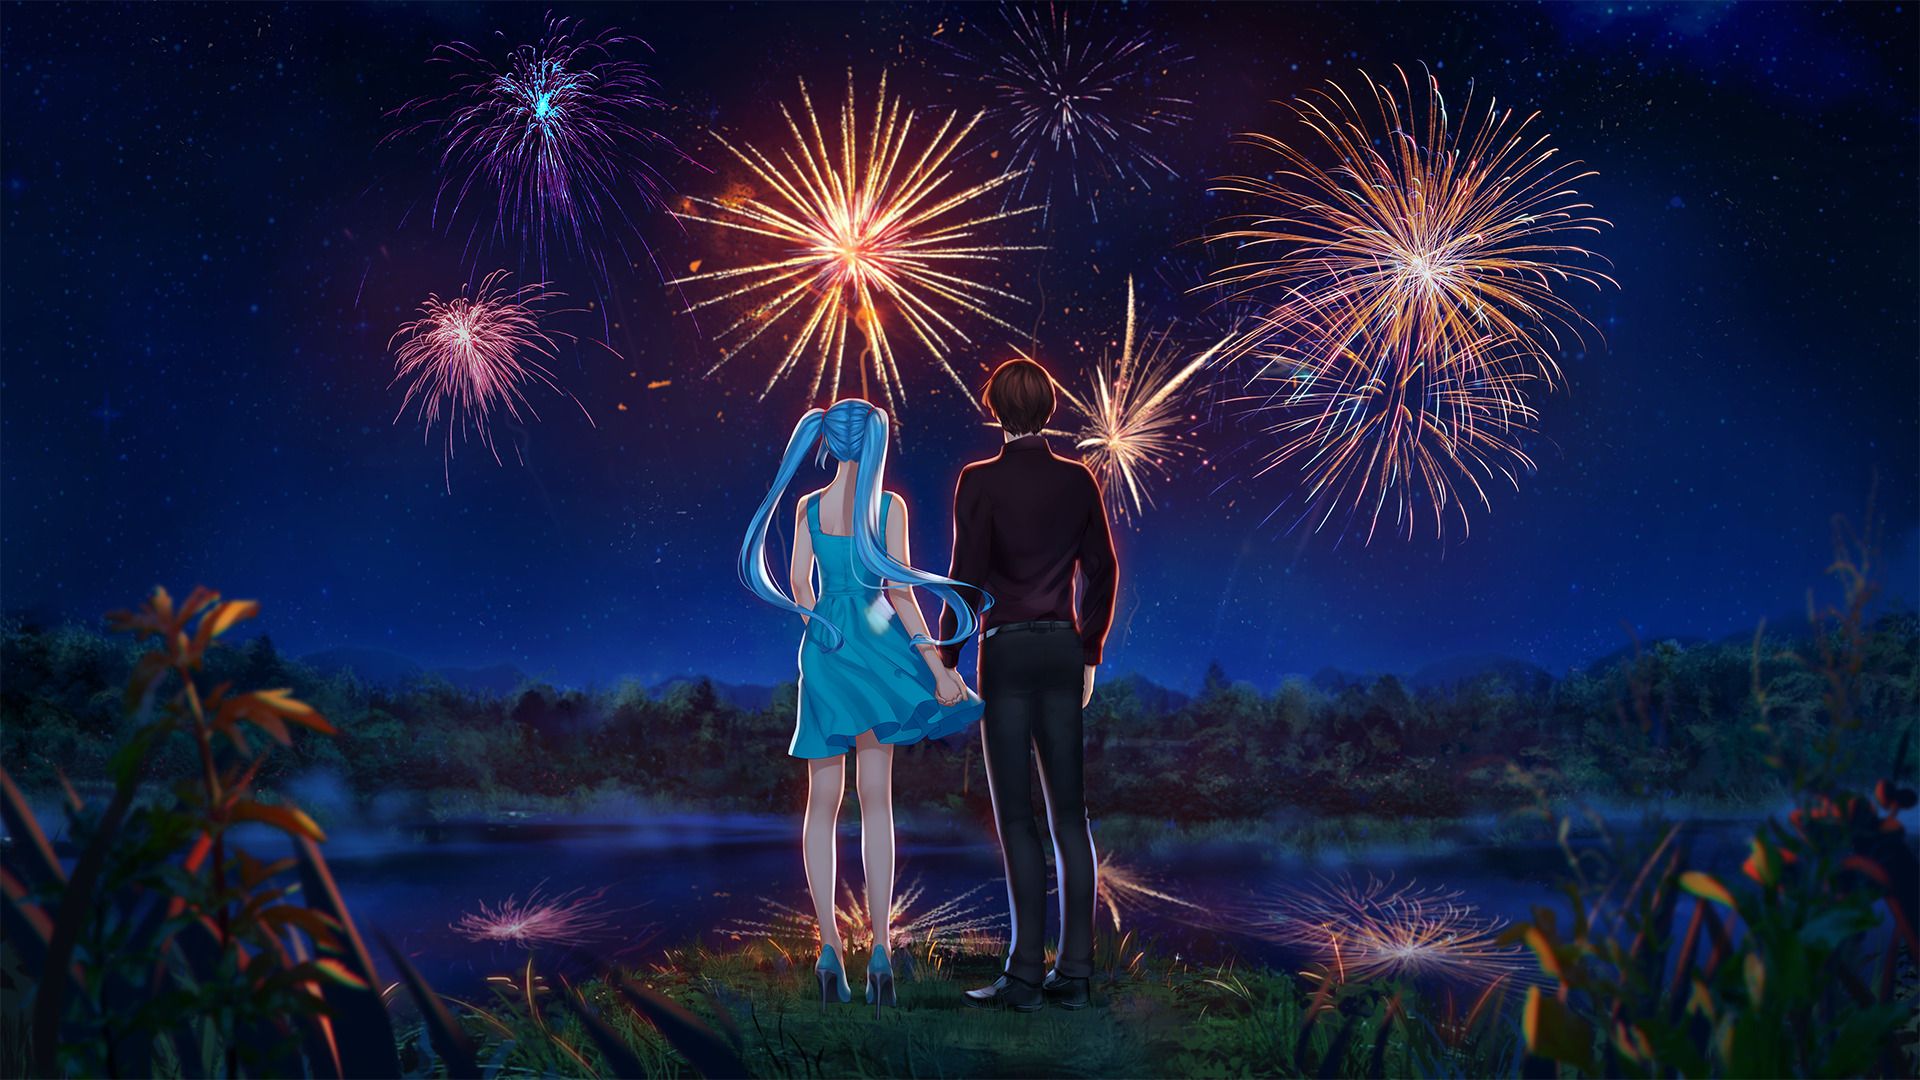 mi_fireworks